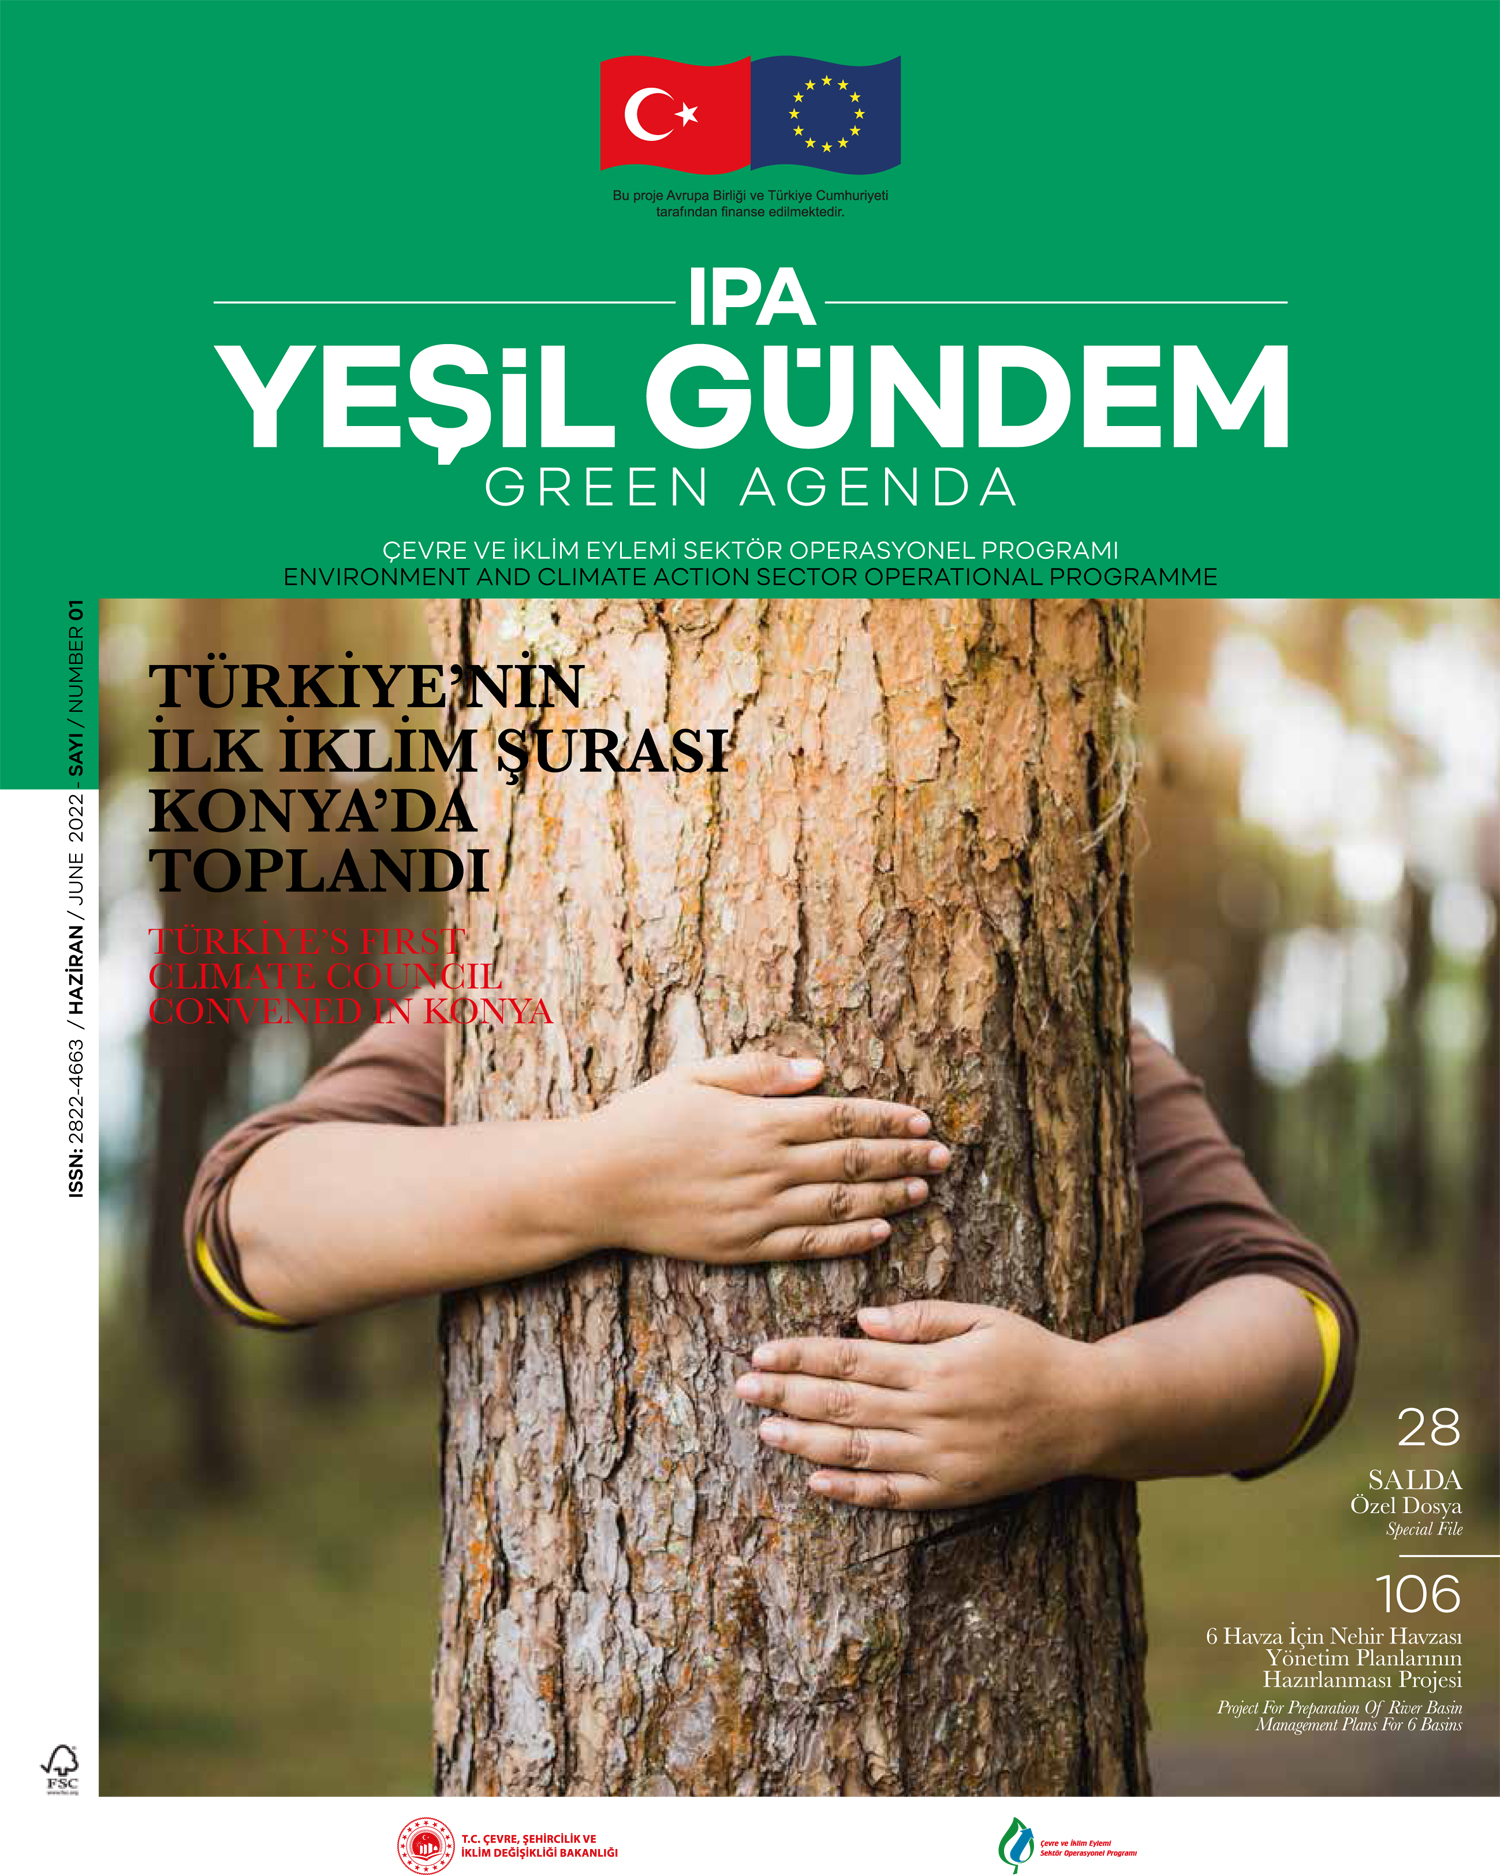 IPA Green Agenda Magazine Has Been Published